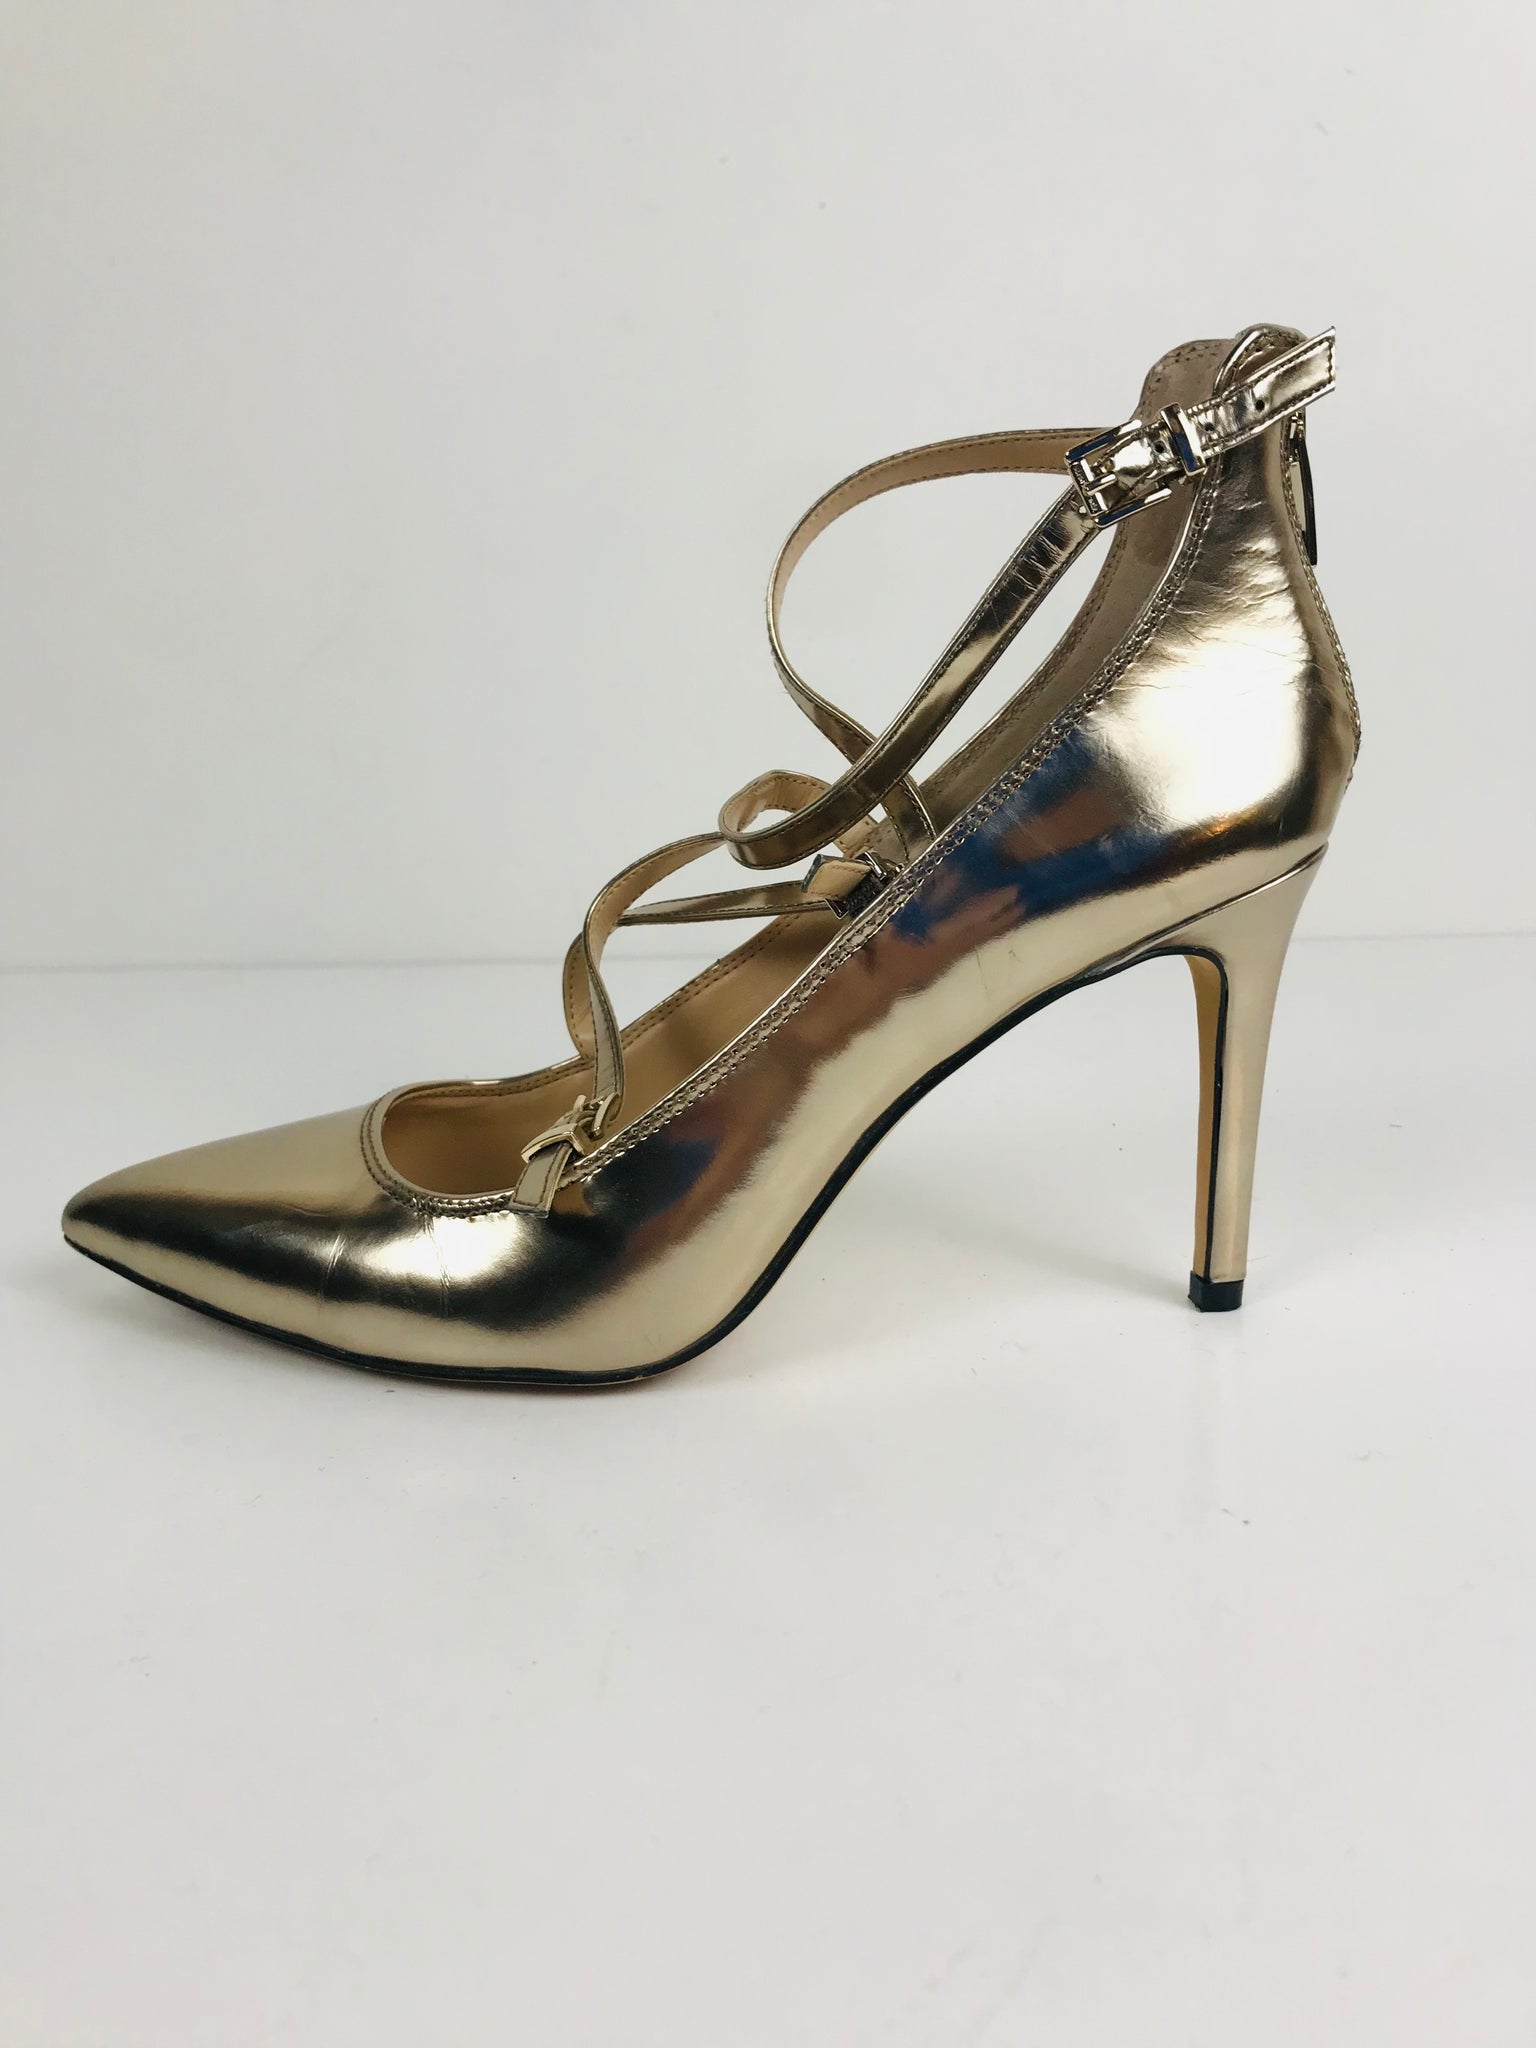 Vince Camuto Women's Patent Gold Heels, EU39 UK6